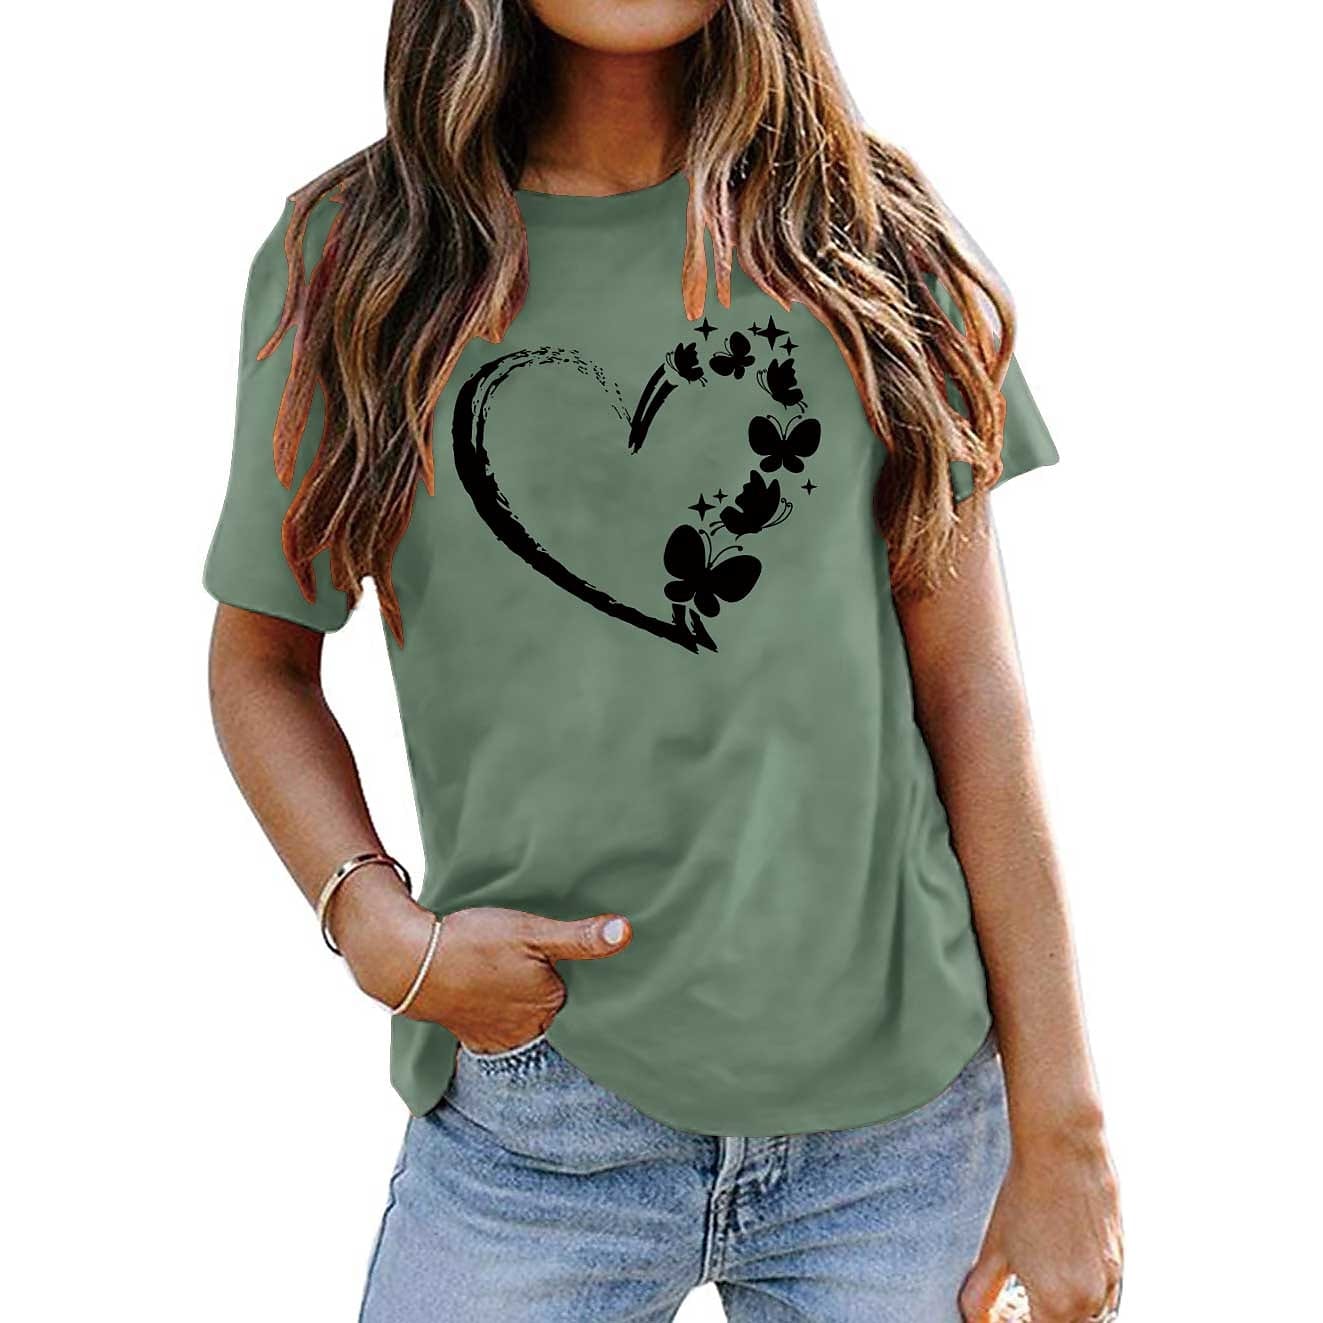 Heart Butterfly Print 100% Cotton Women's T-shirt Peace Green & Black White Basic Short Sleeve